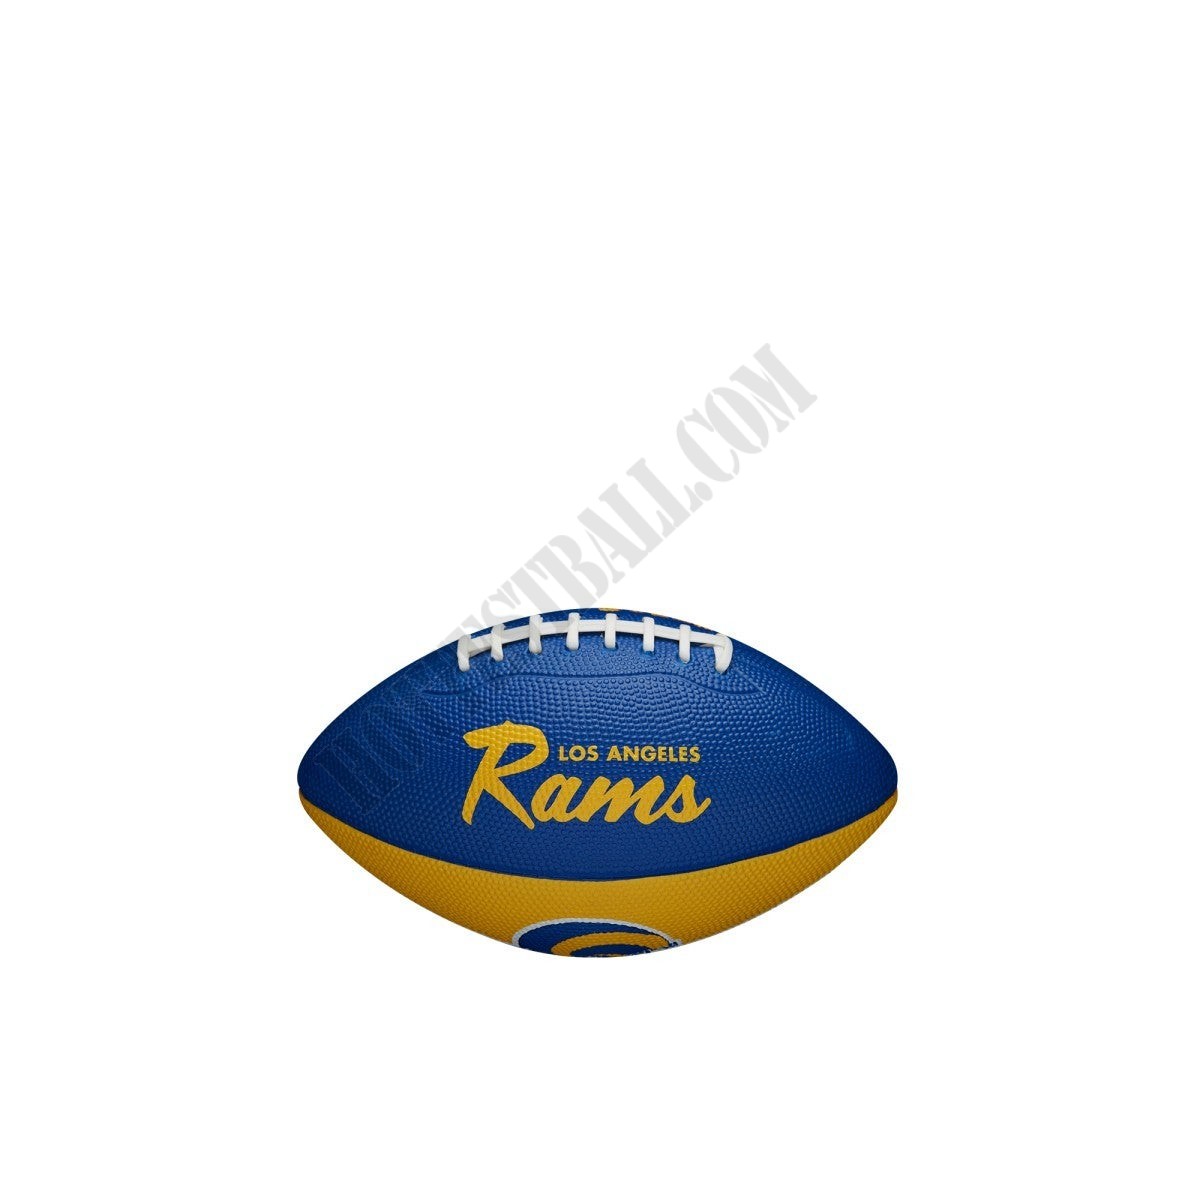 NFL Retro Mini Football - Los Angeles Rams ● Wilson Promotions - NFL Retro Mini Football - Los Angeles Rams ● Wilson Promotions